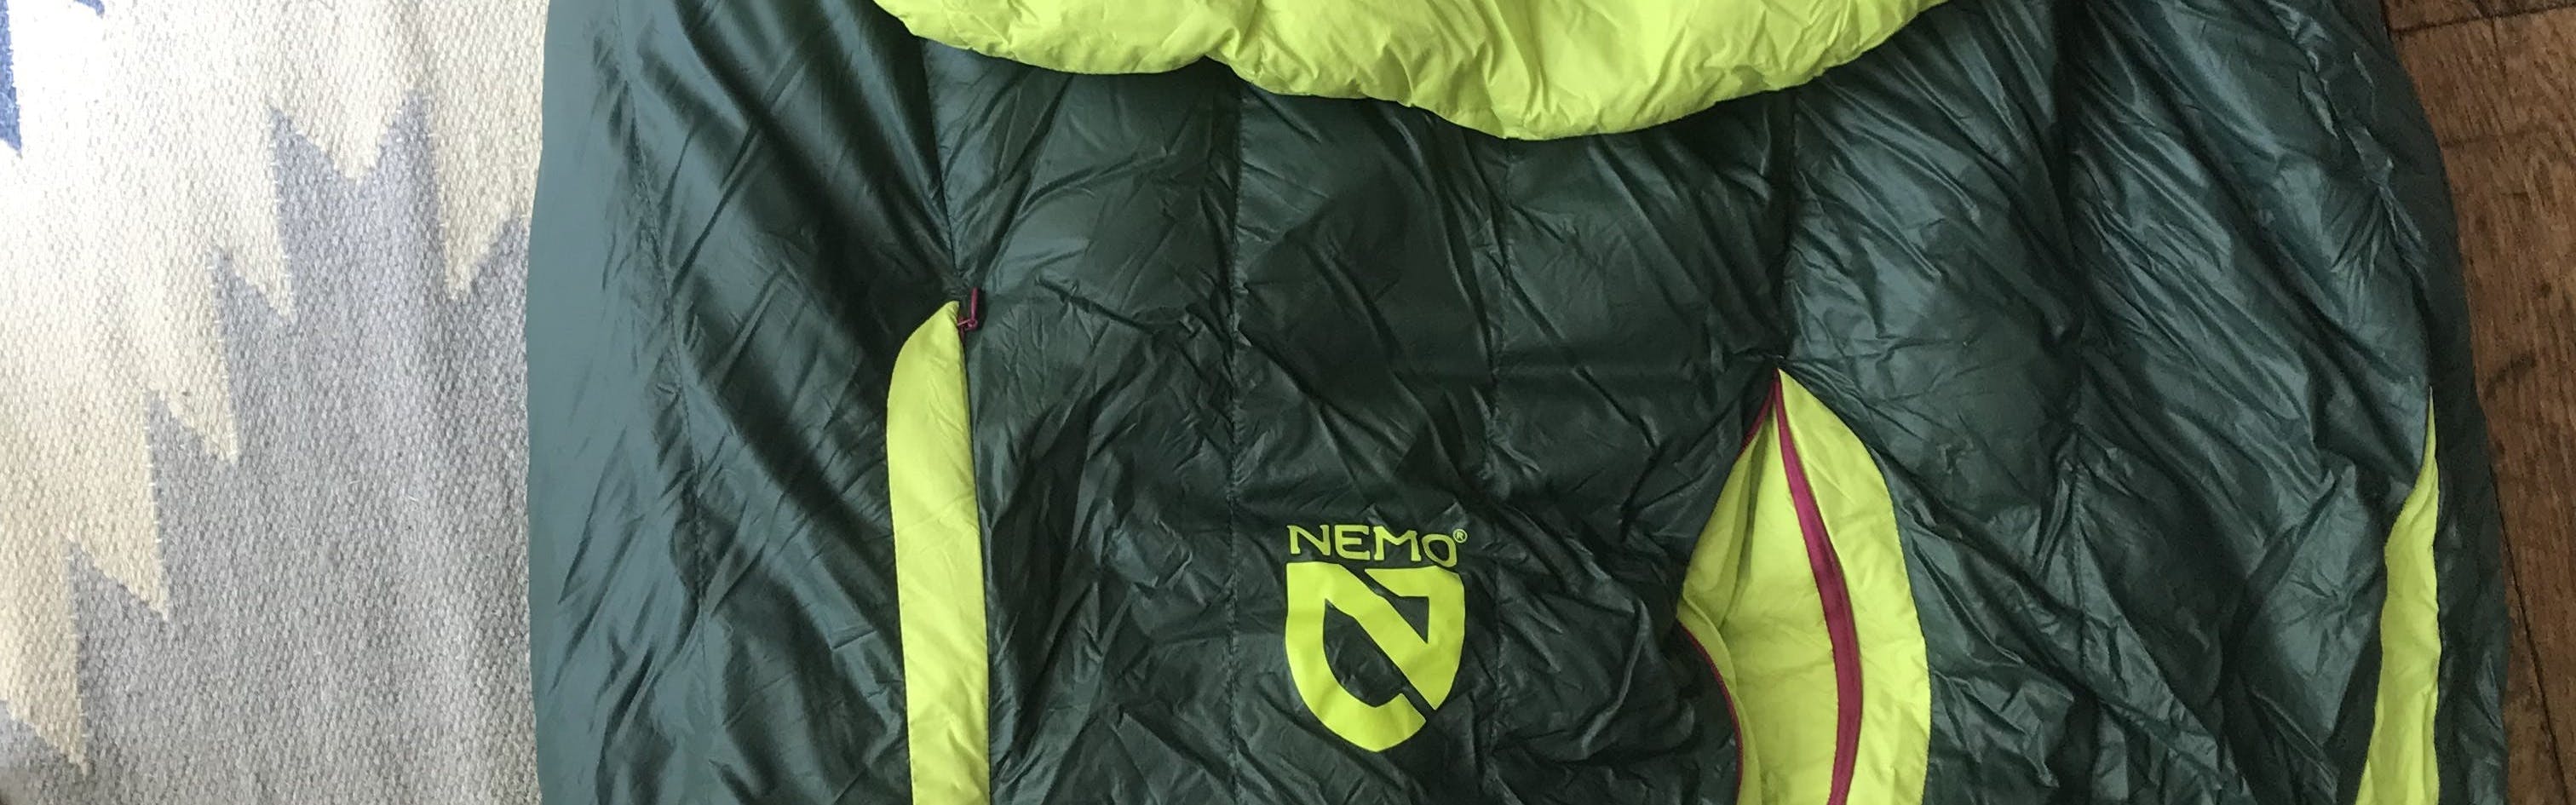 The Nemo Disco 15 degree sleeping bag.